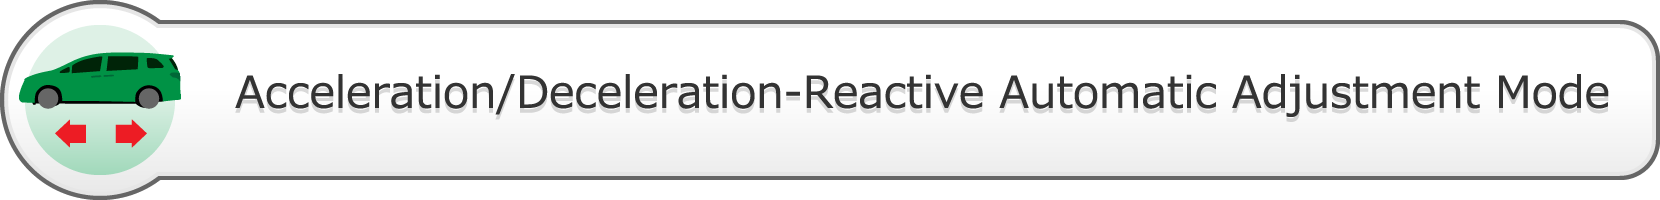 Acceleration/Deceleration-Reactive Automatic Adjustment Mode